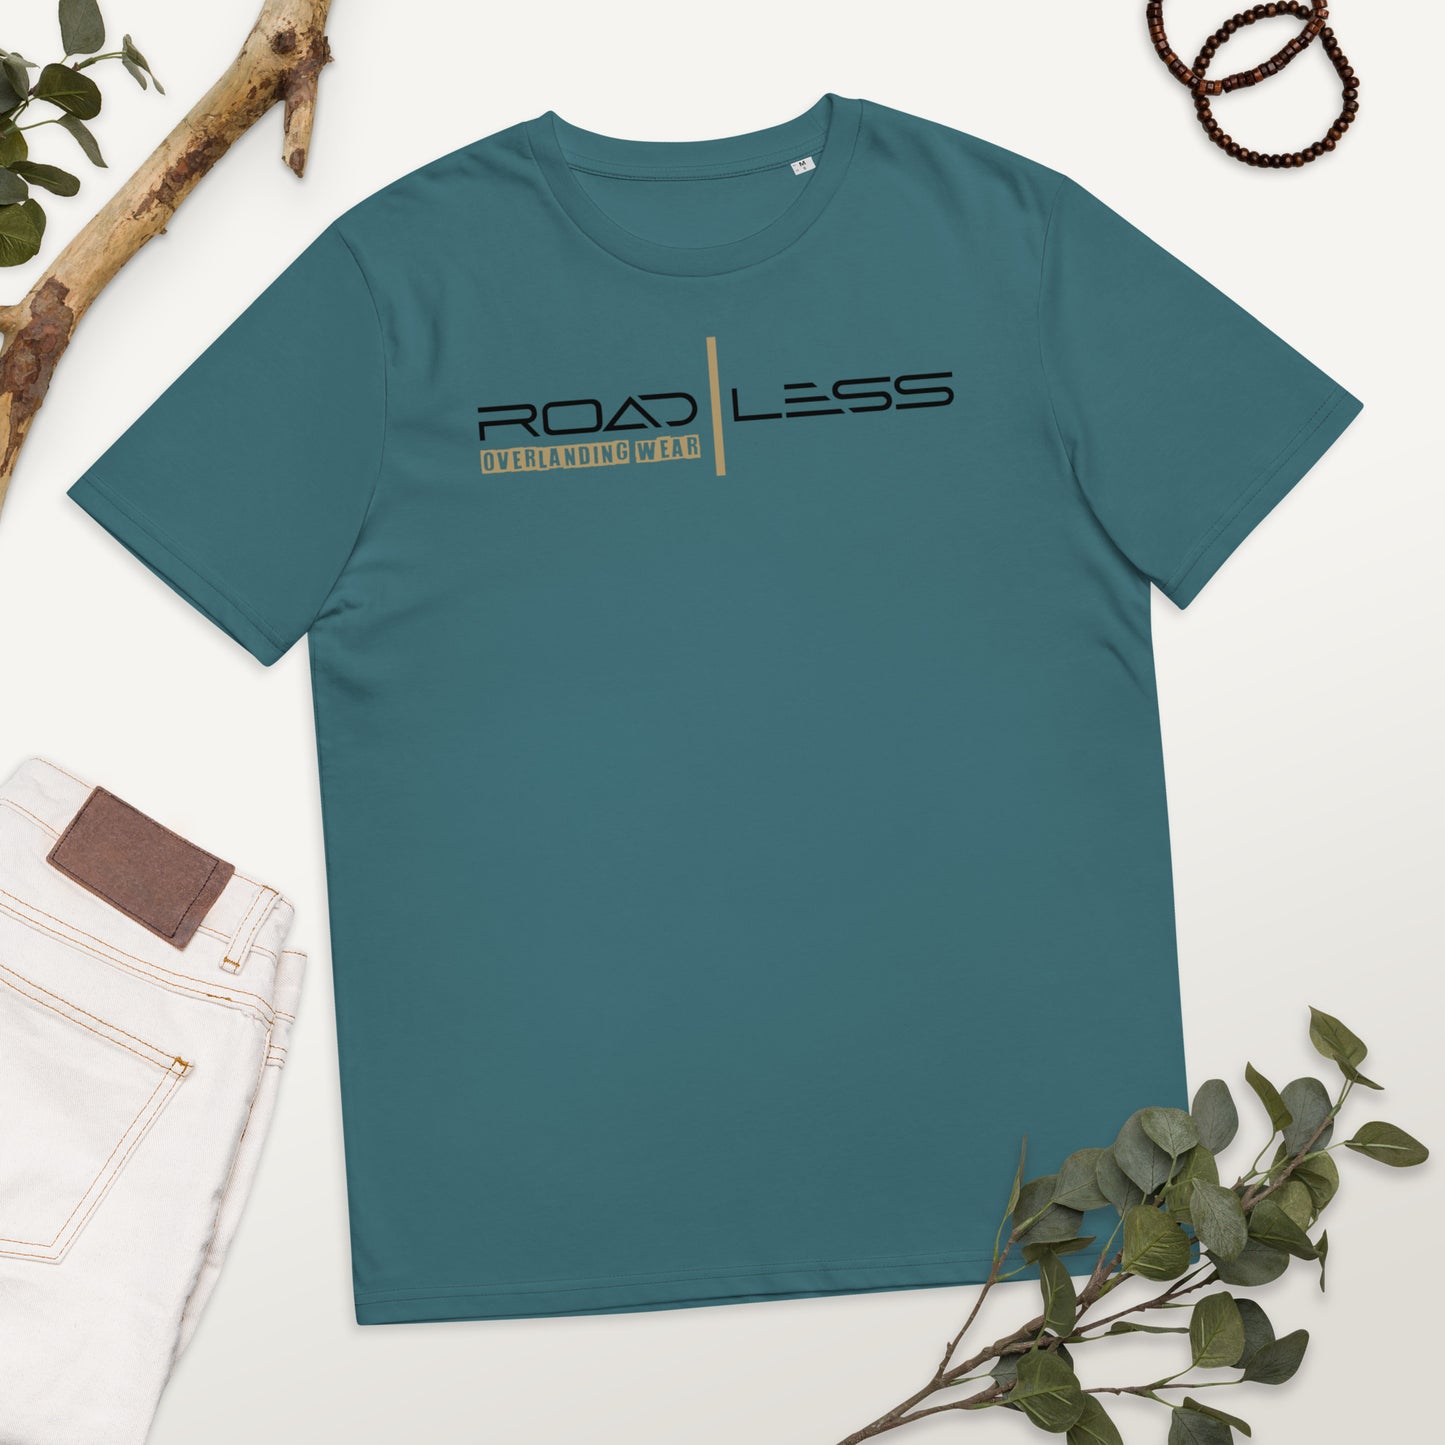 Unisex-Bio-Baumwoll-T-Shirt (Road Less black)